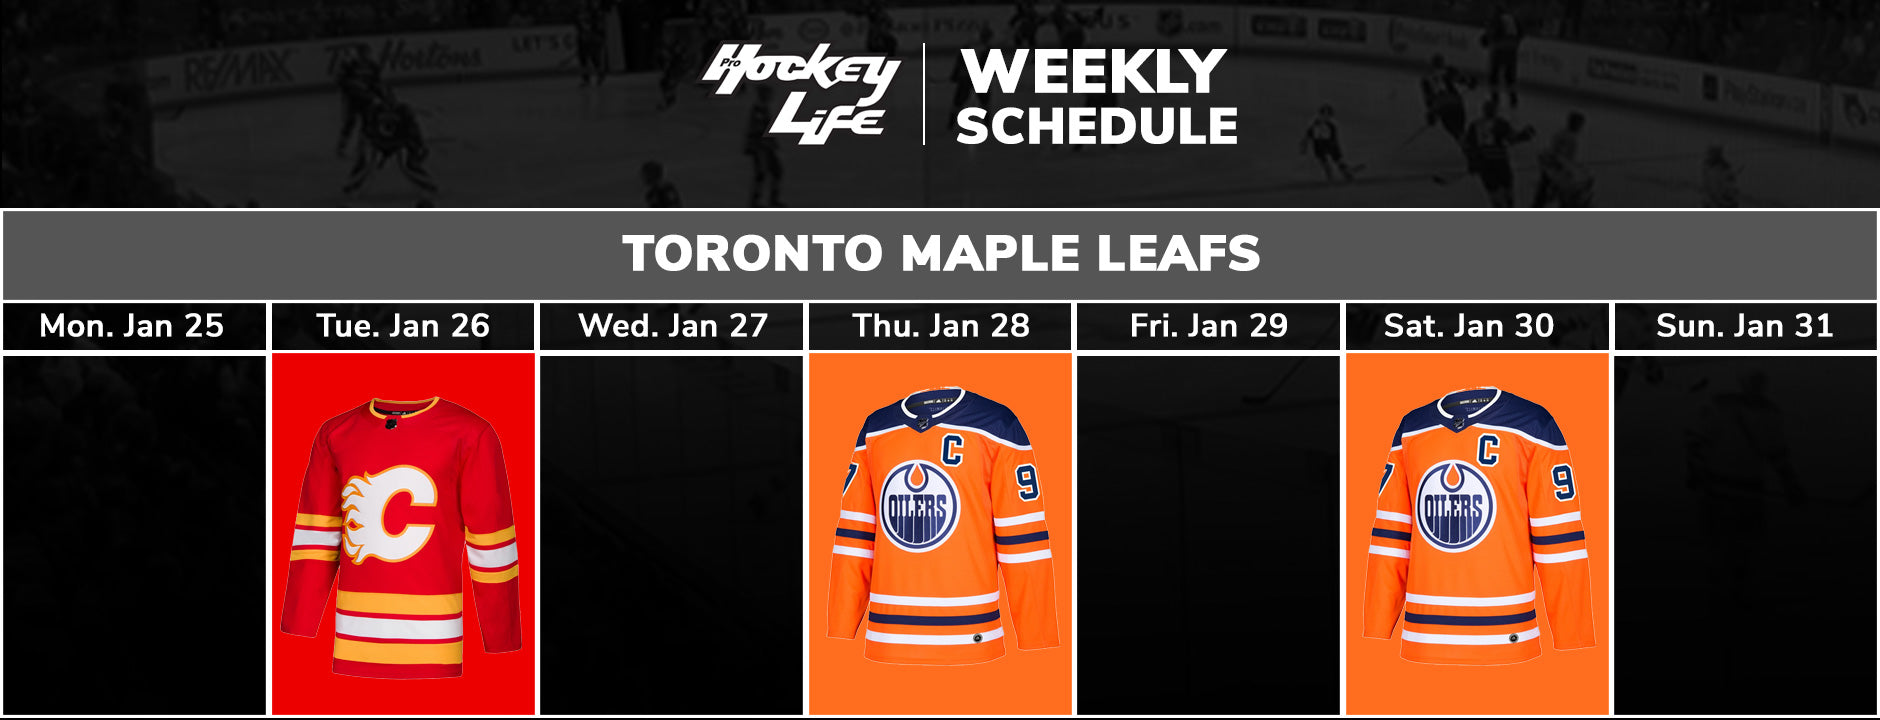 Toronto Maple Leafs Schedule